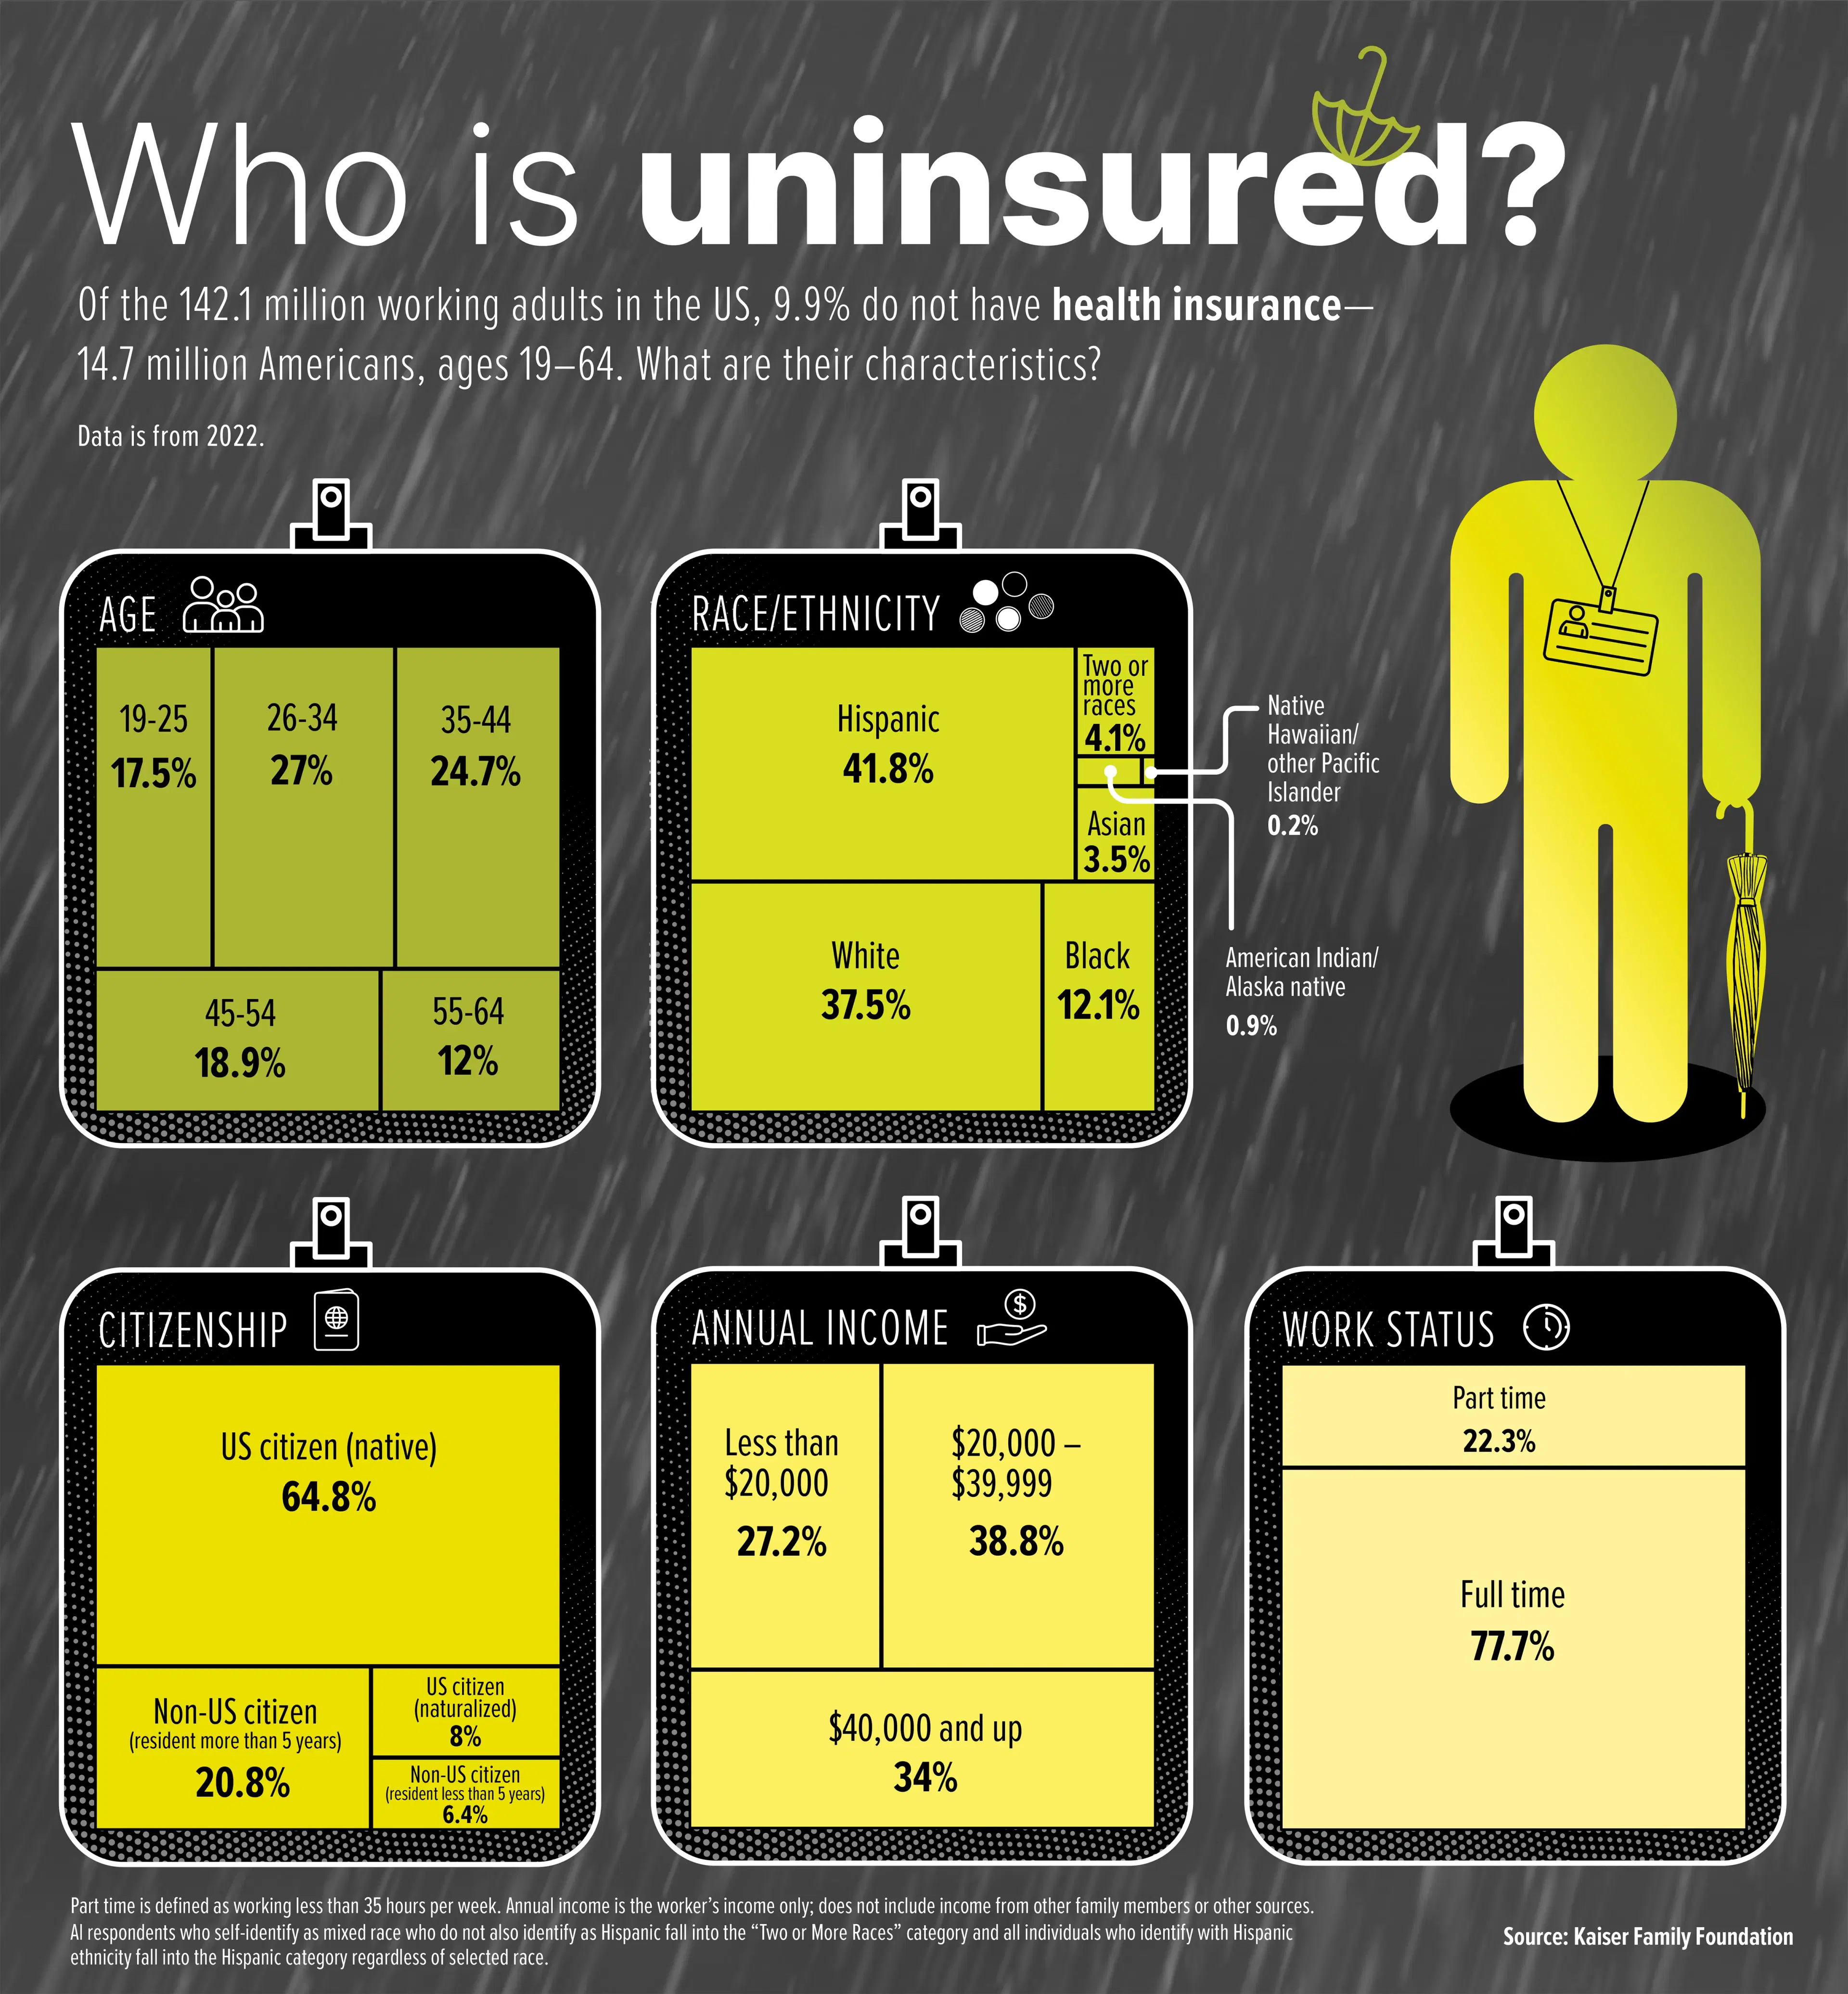 Who is Uninsured?